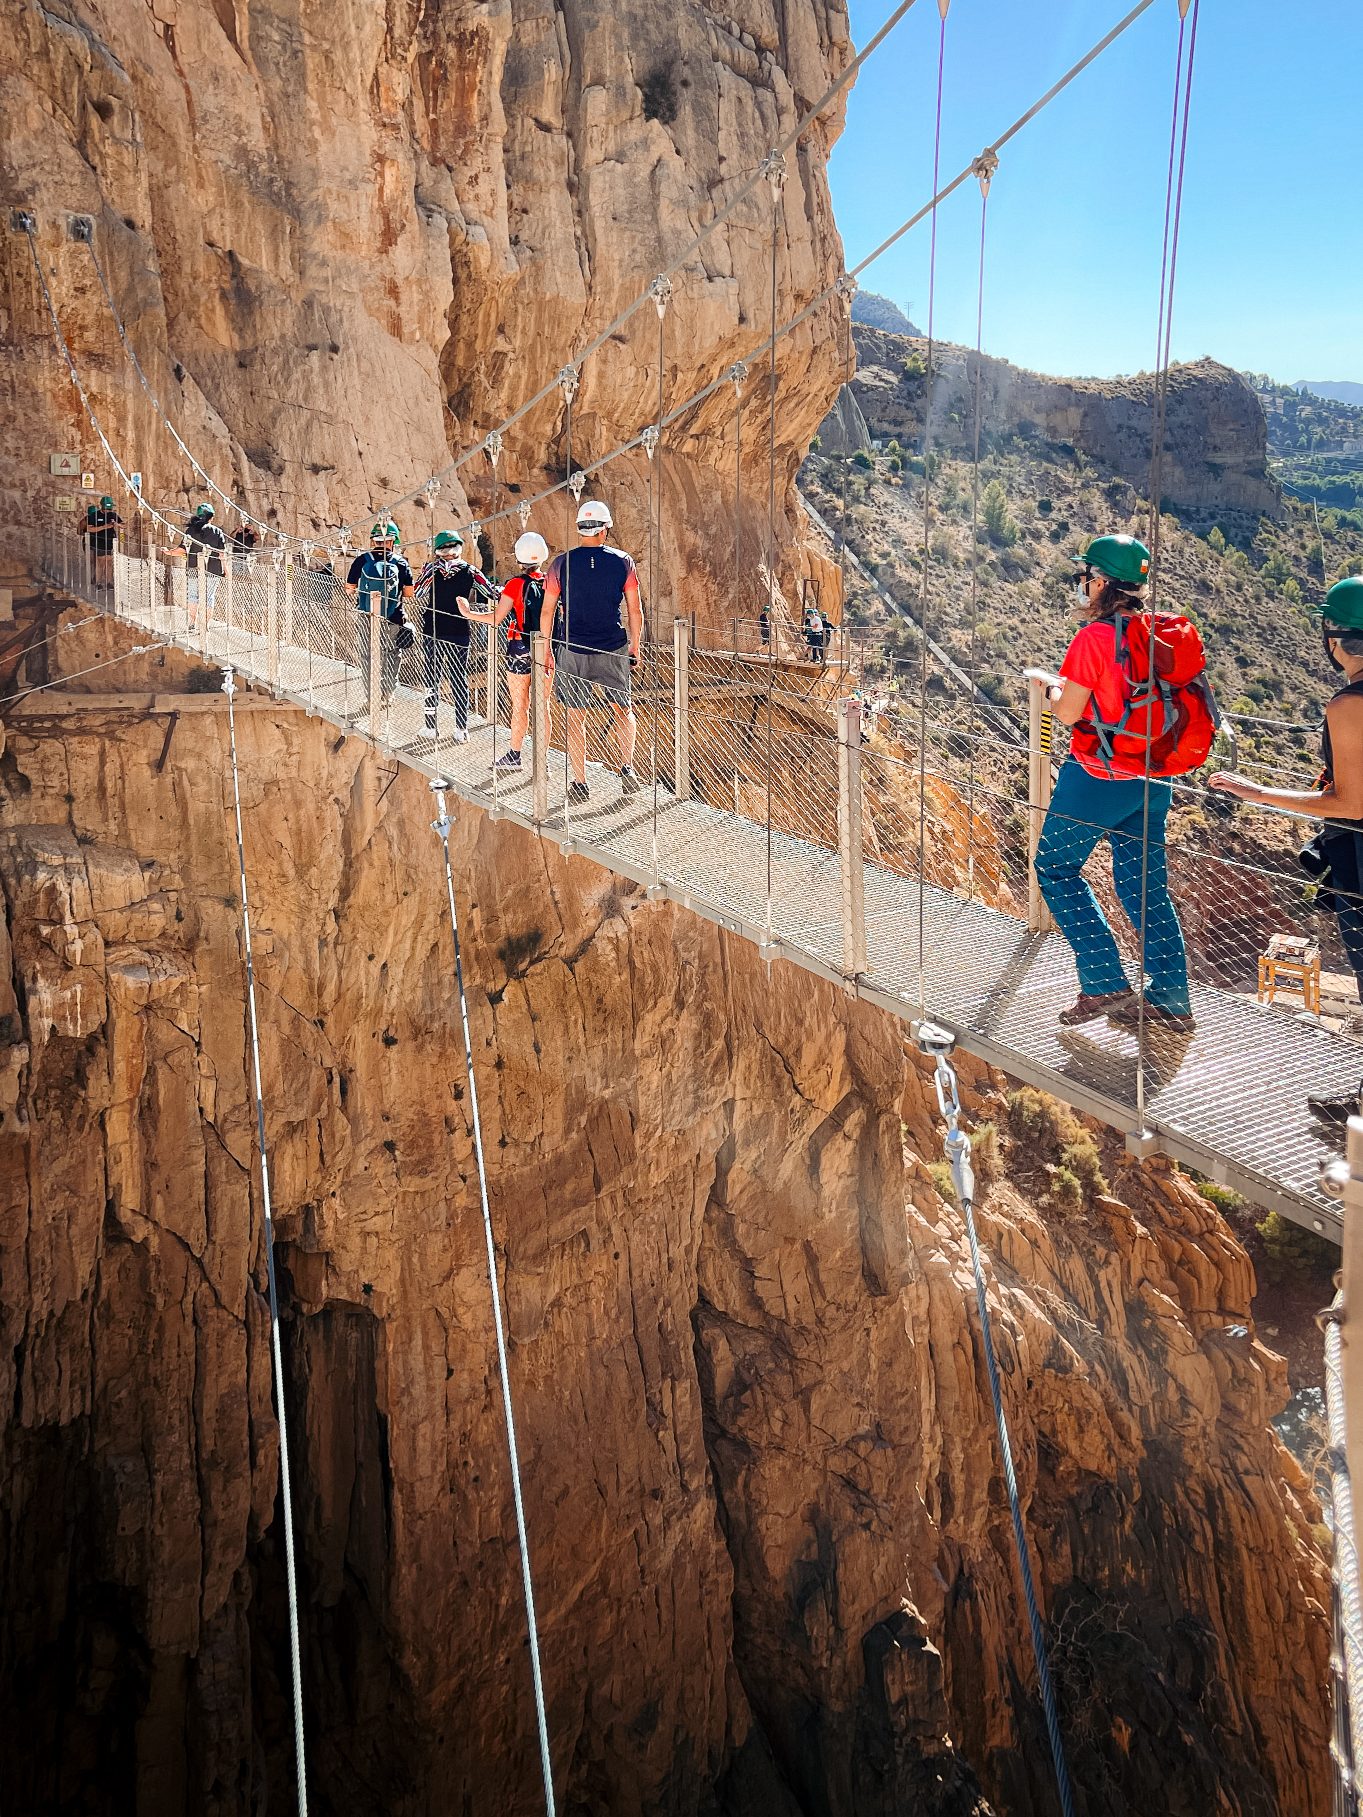 group tour members crossing the new suspended bridge at el caminito del rey in málaga, spain